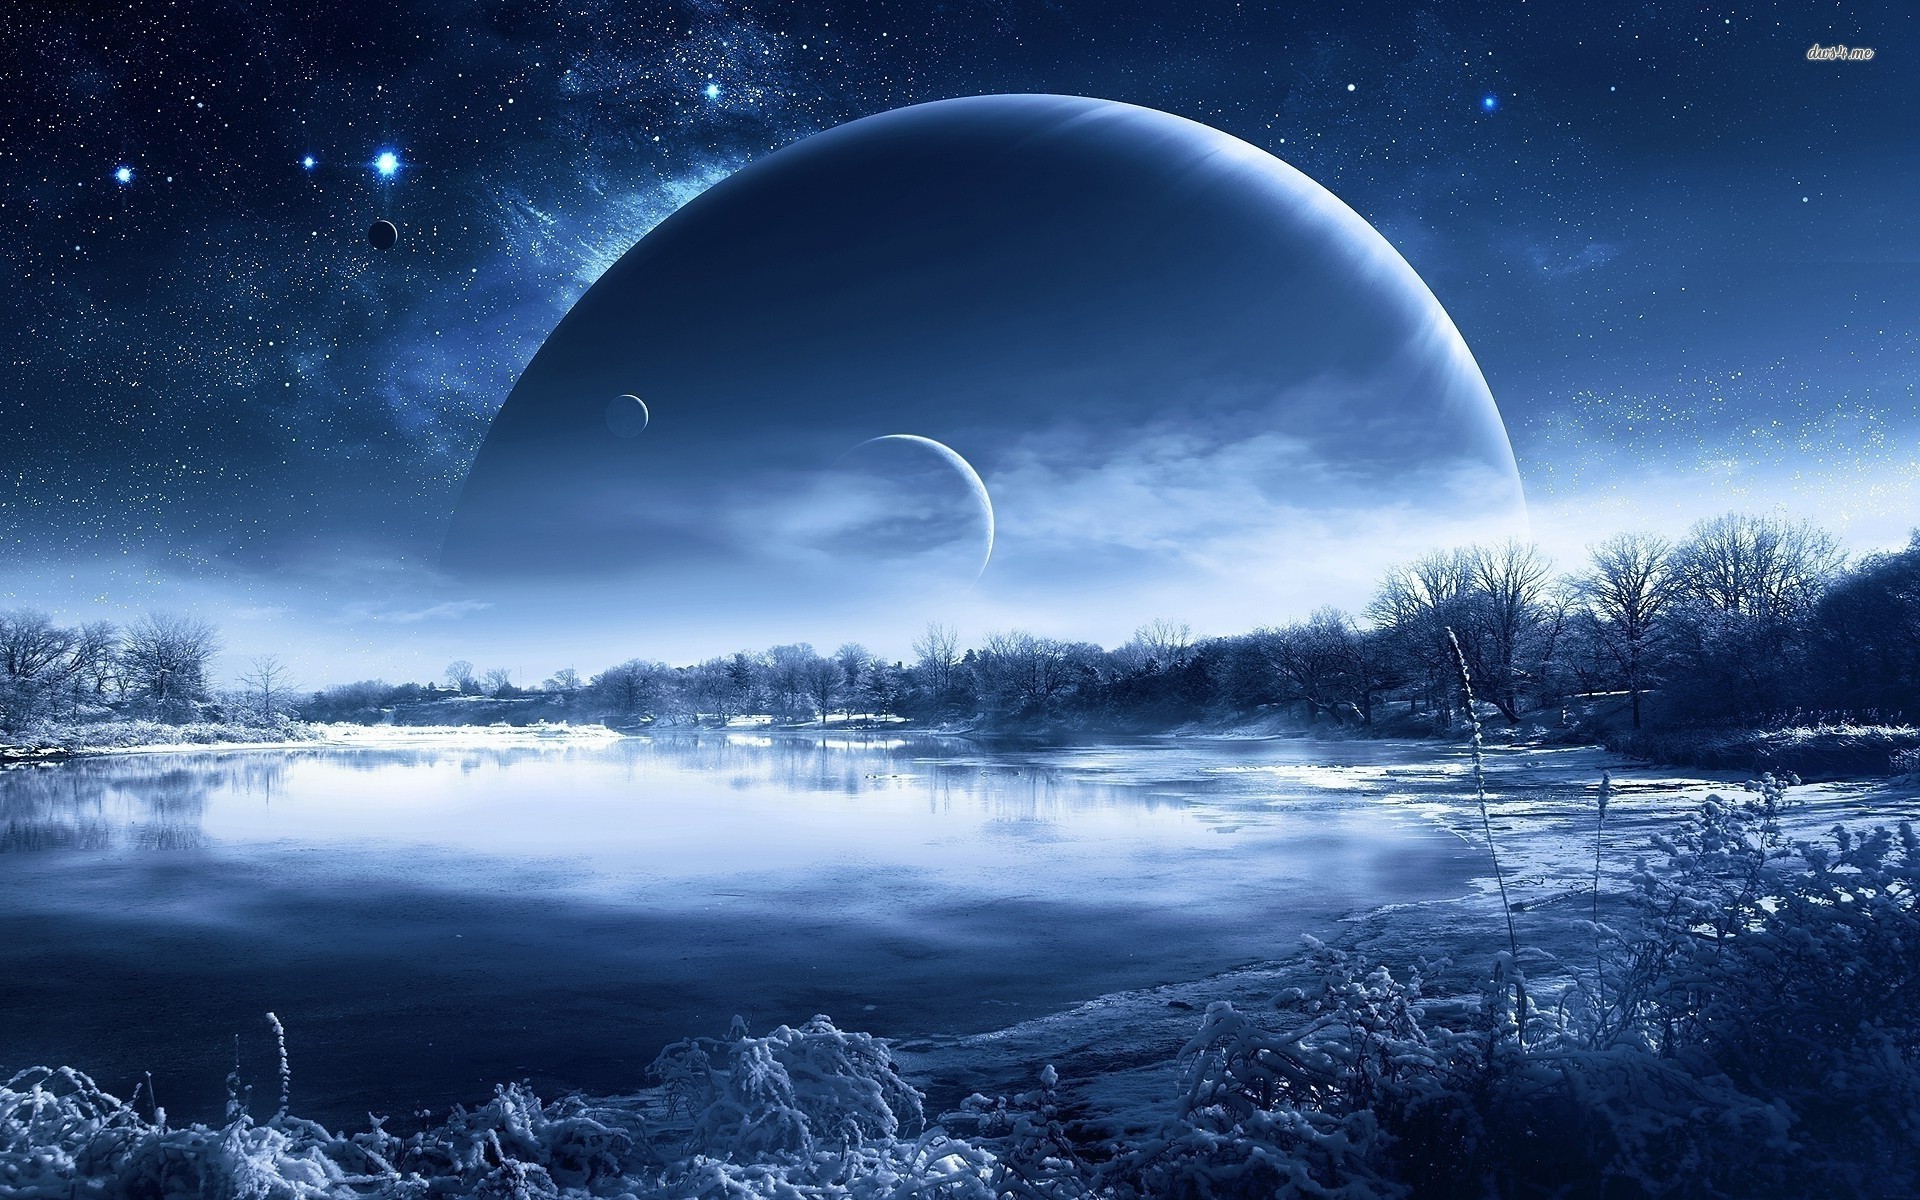 Icy planet landscape